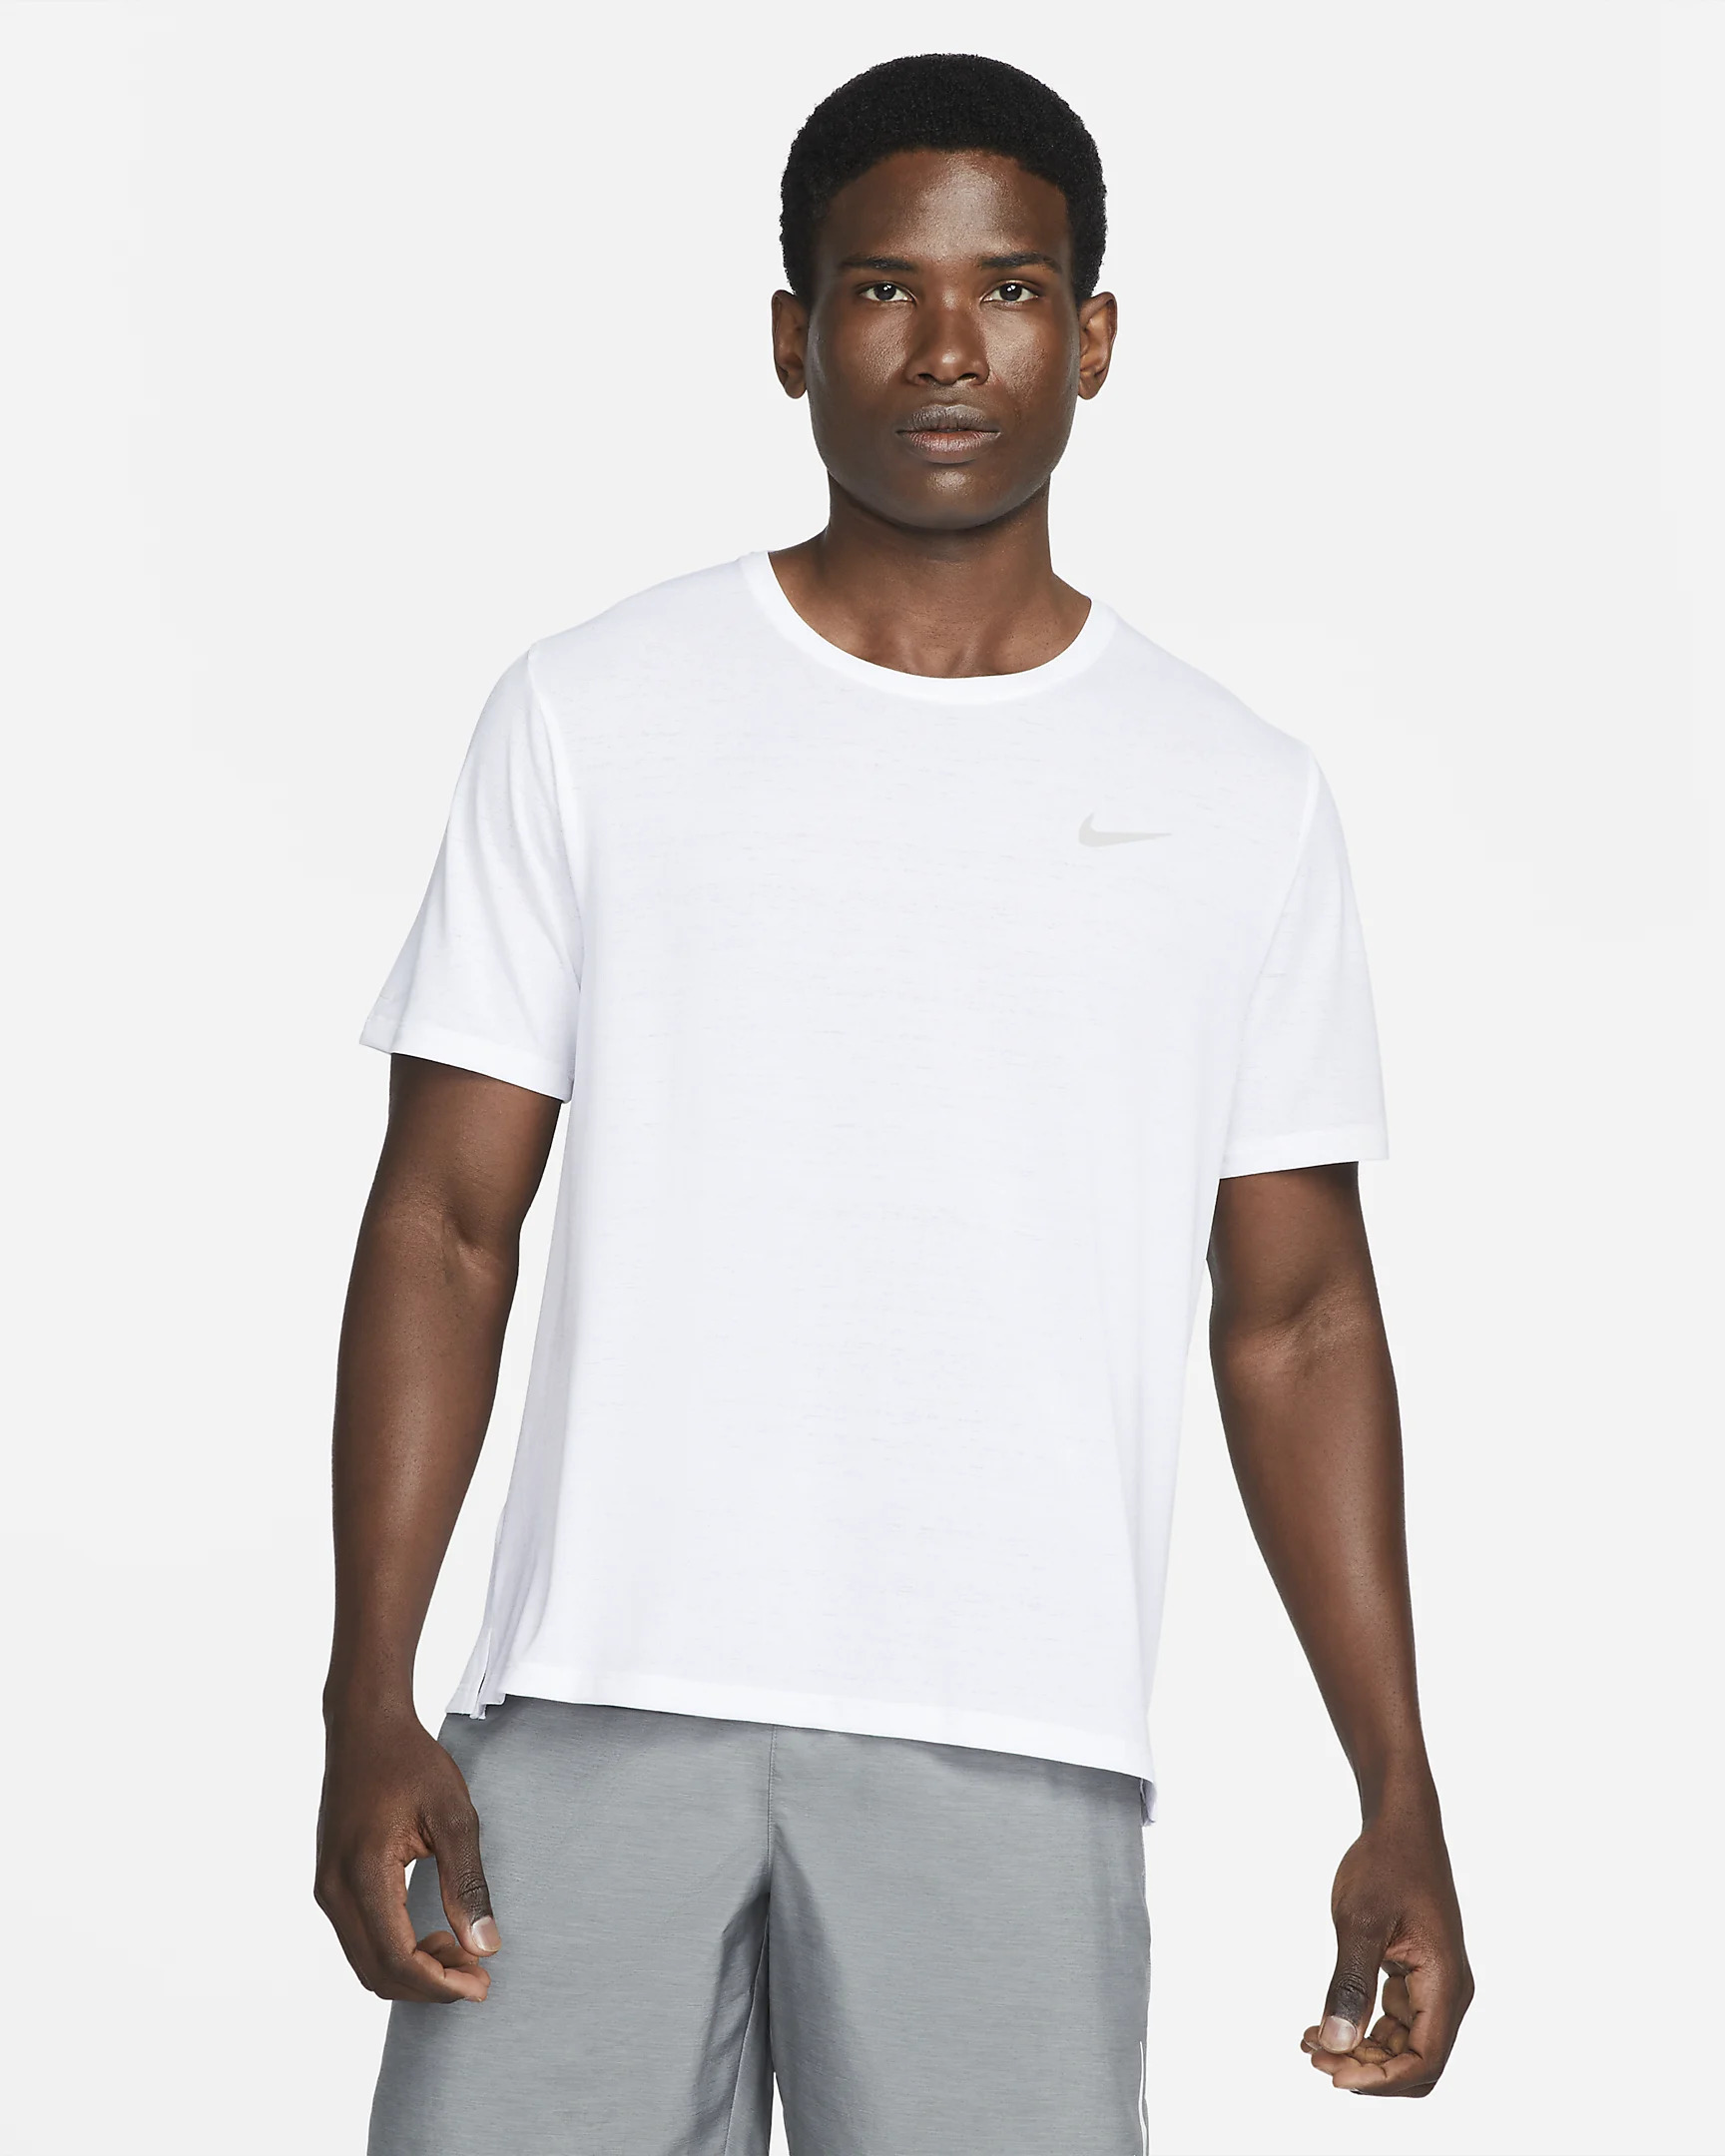 Nike Running Mens White 'Miler' T-Shirt | The Rainy Days